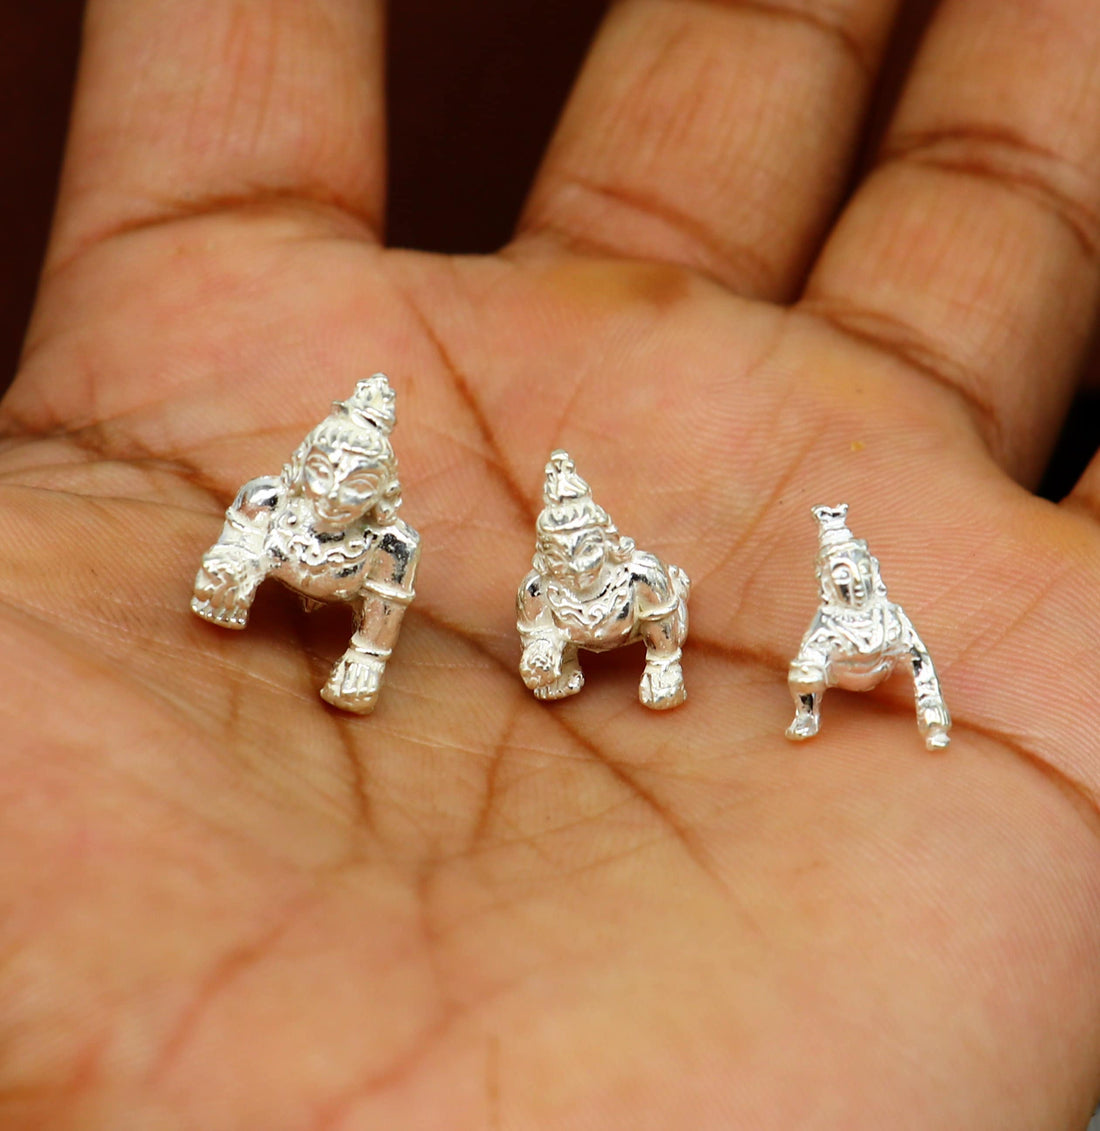 Solid silver handmade customized idol little krishna, Ladu Gopal,crawling Krishna small statue sculpture home temple puja articles su370 - TRIBAL ORNAMENTS